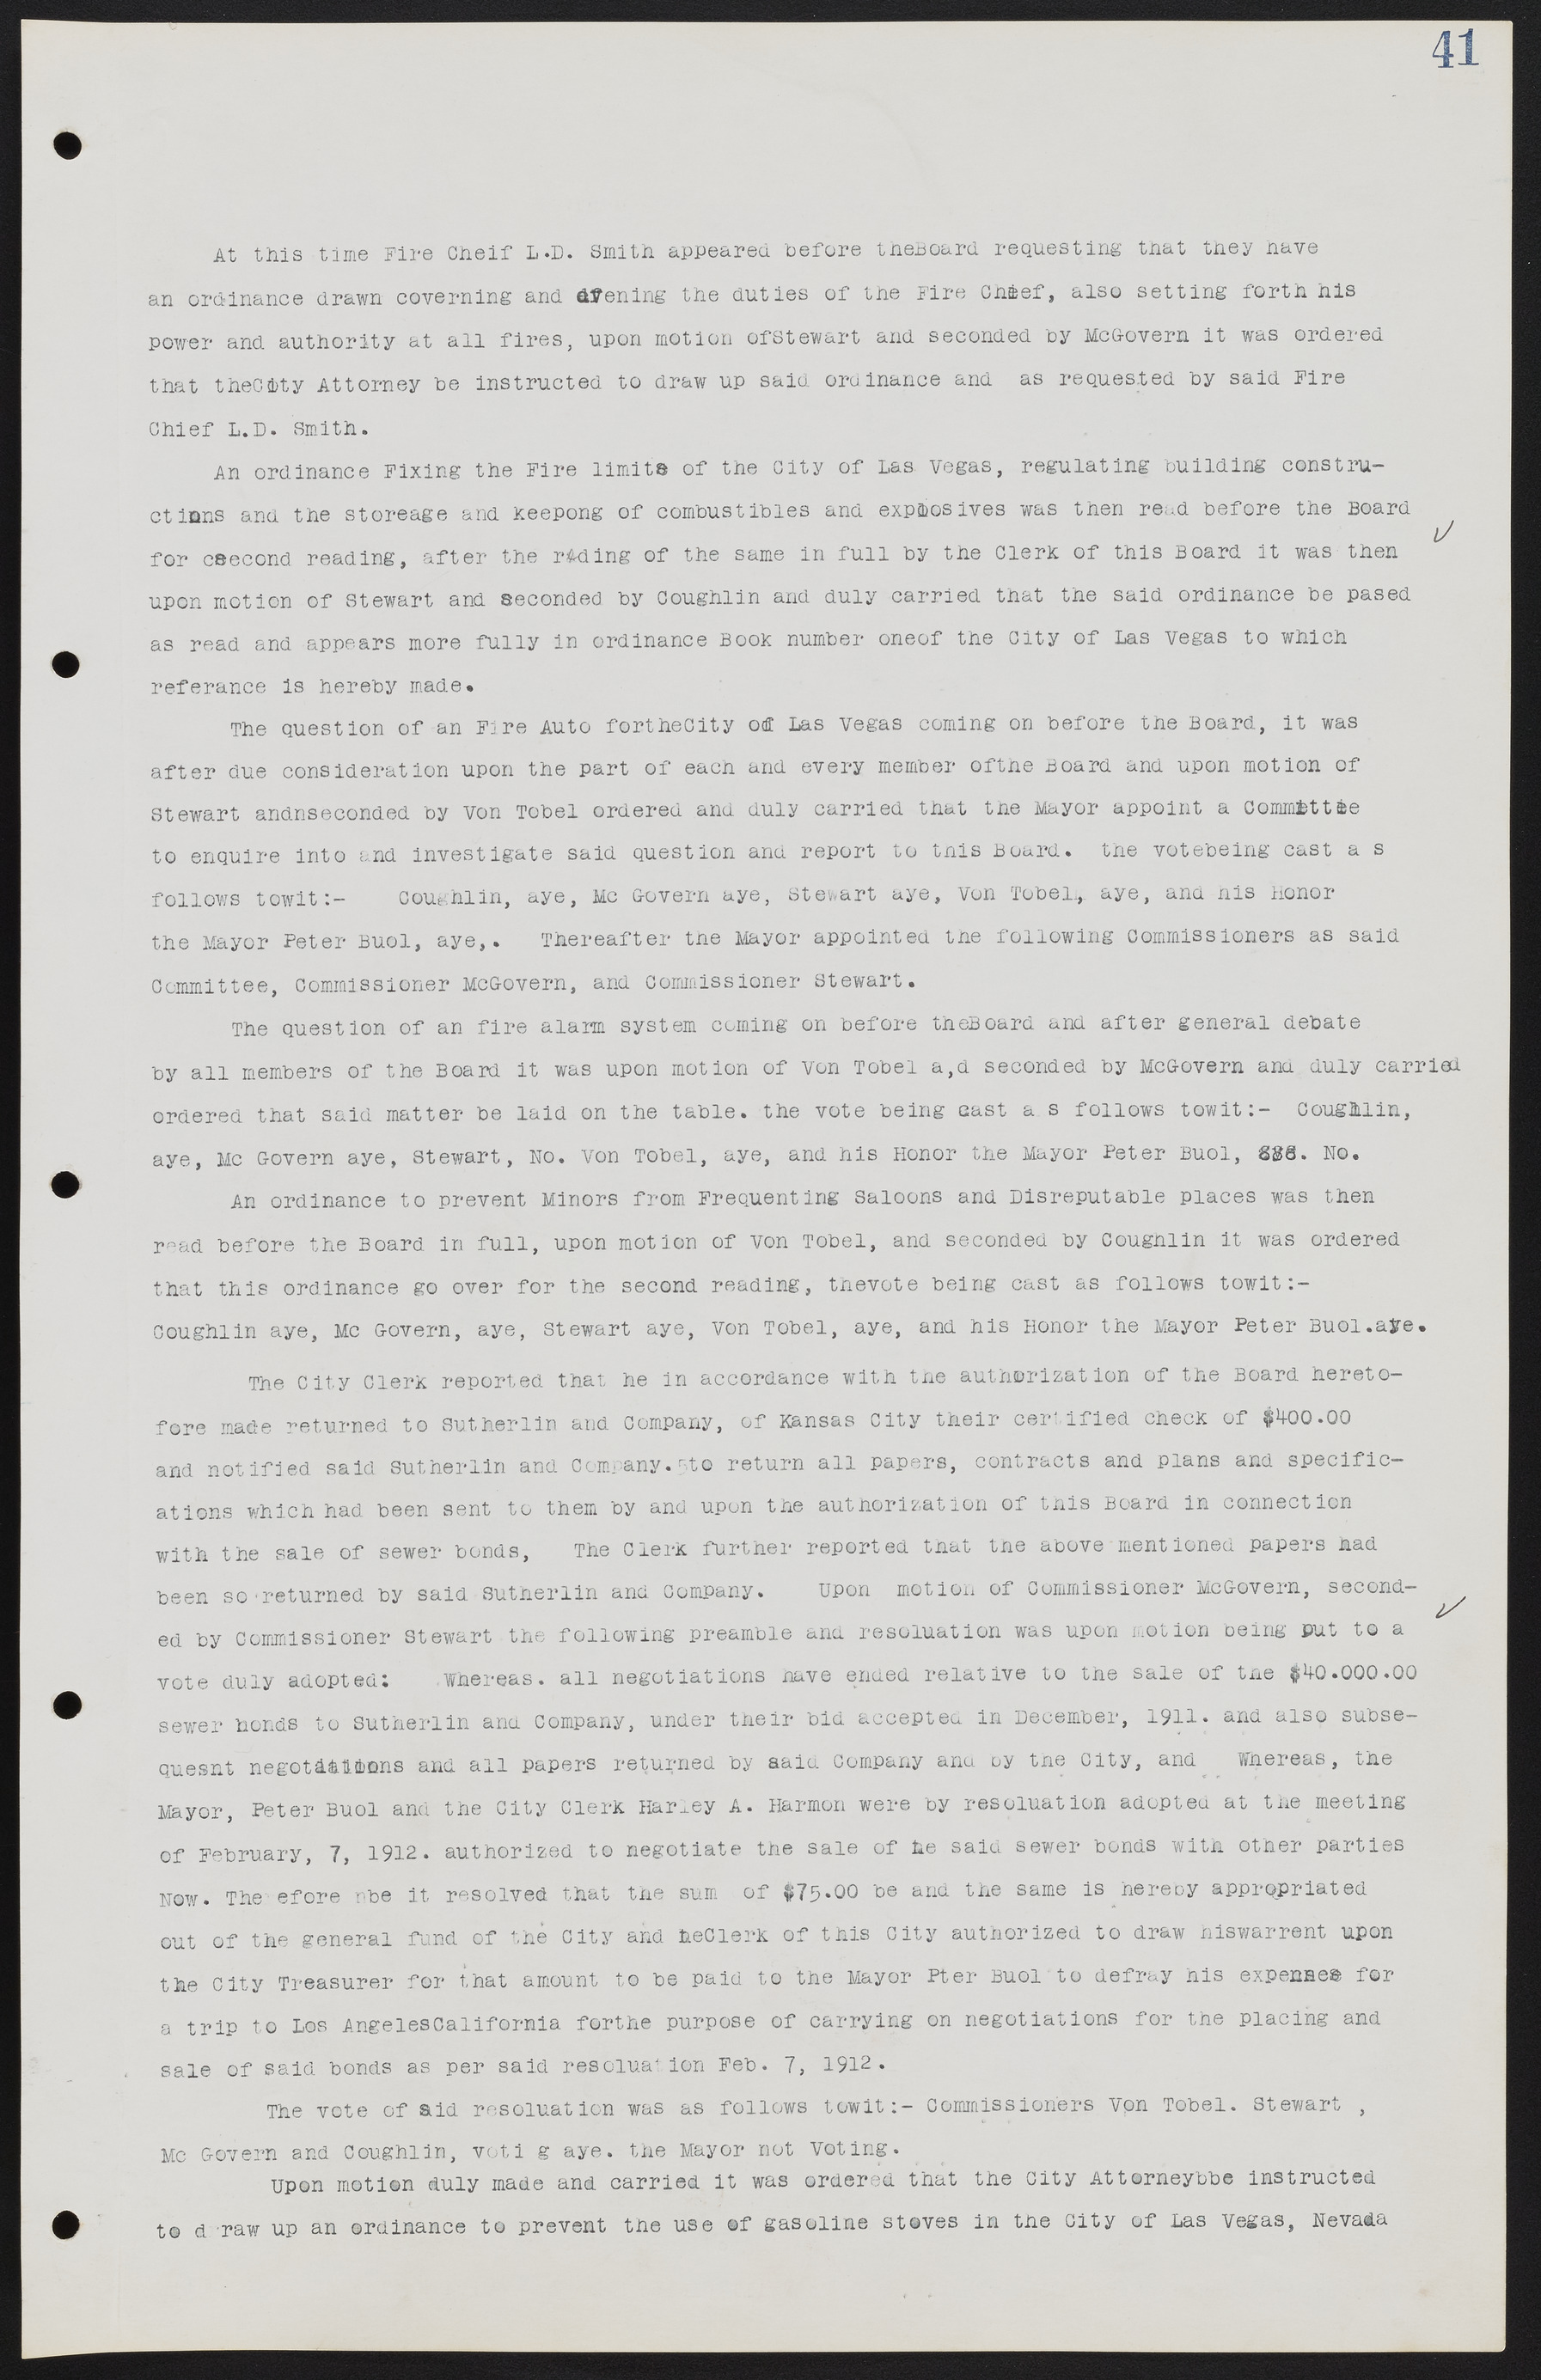 Las Vegas City Commission Minutes, June 22, 1911 to February 7, 1922, lvc000001-55